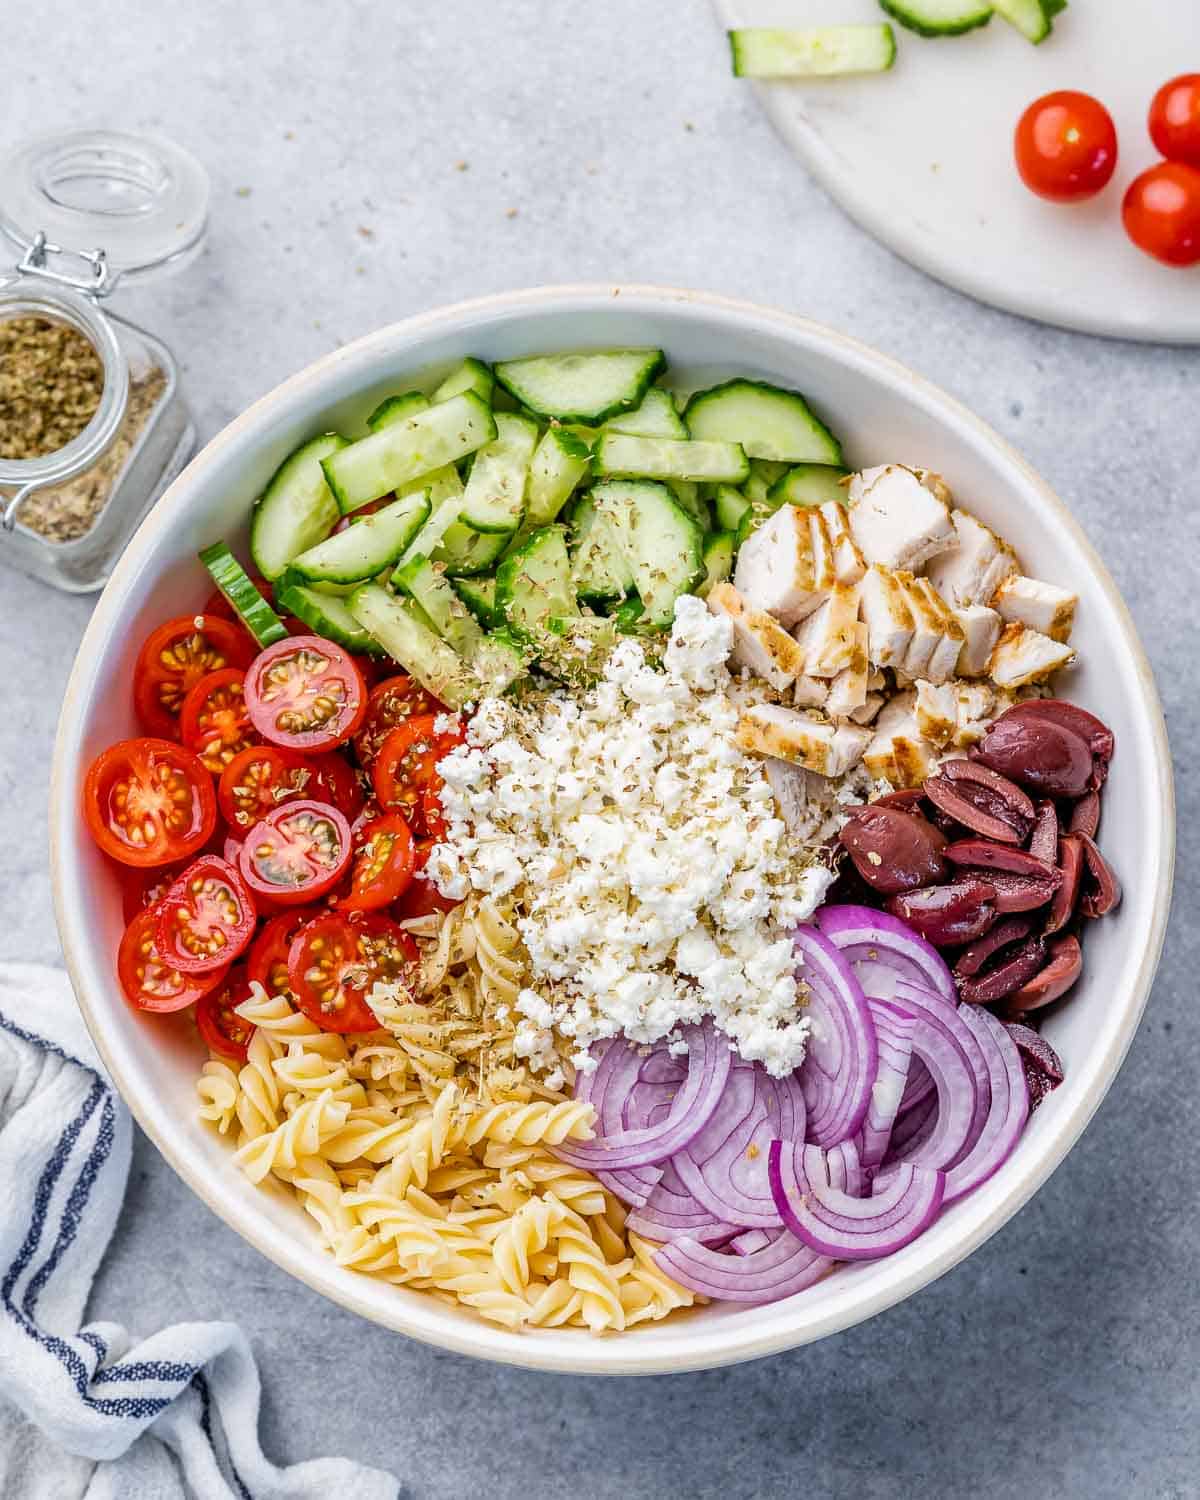 Greek salad ingredients in a large white serving bowl.